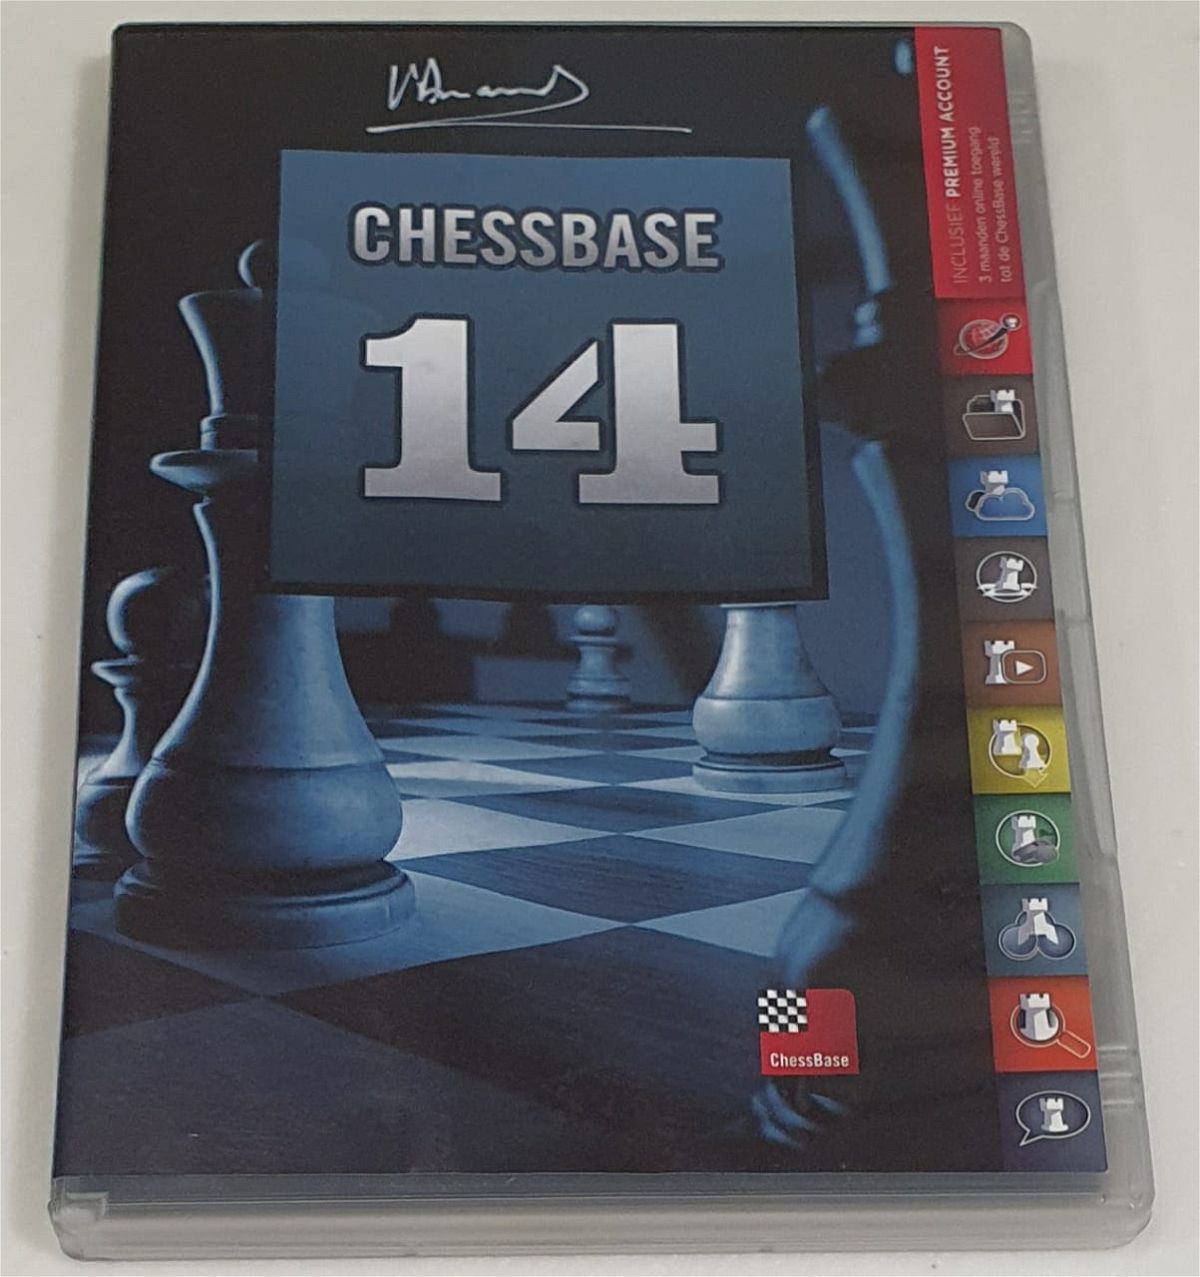 CHESS immortal - Download ChessBase 15 ChessBase 15 (32